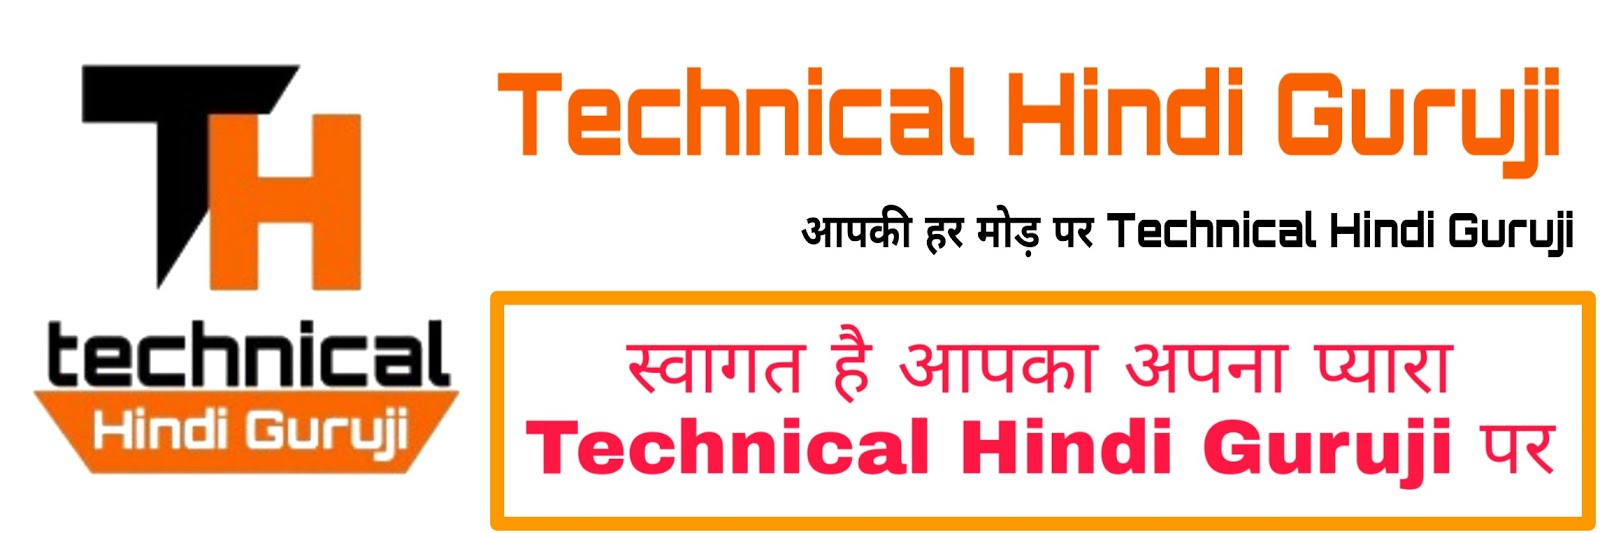 Technical Hindi Guruji 